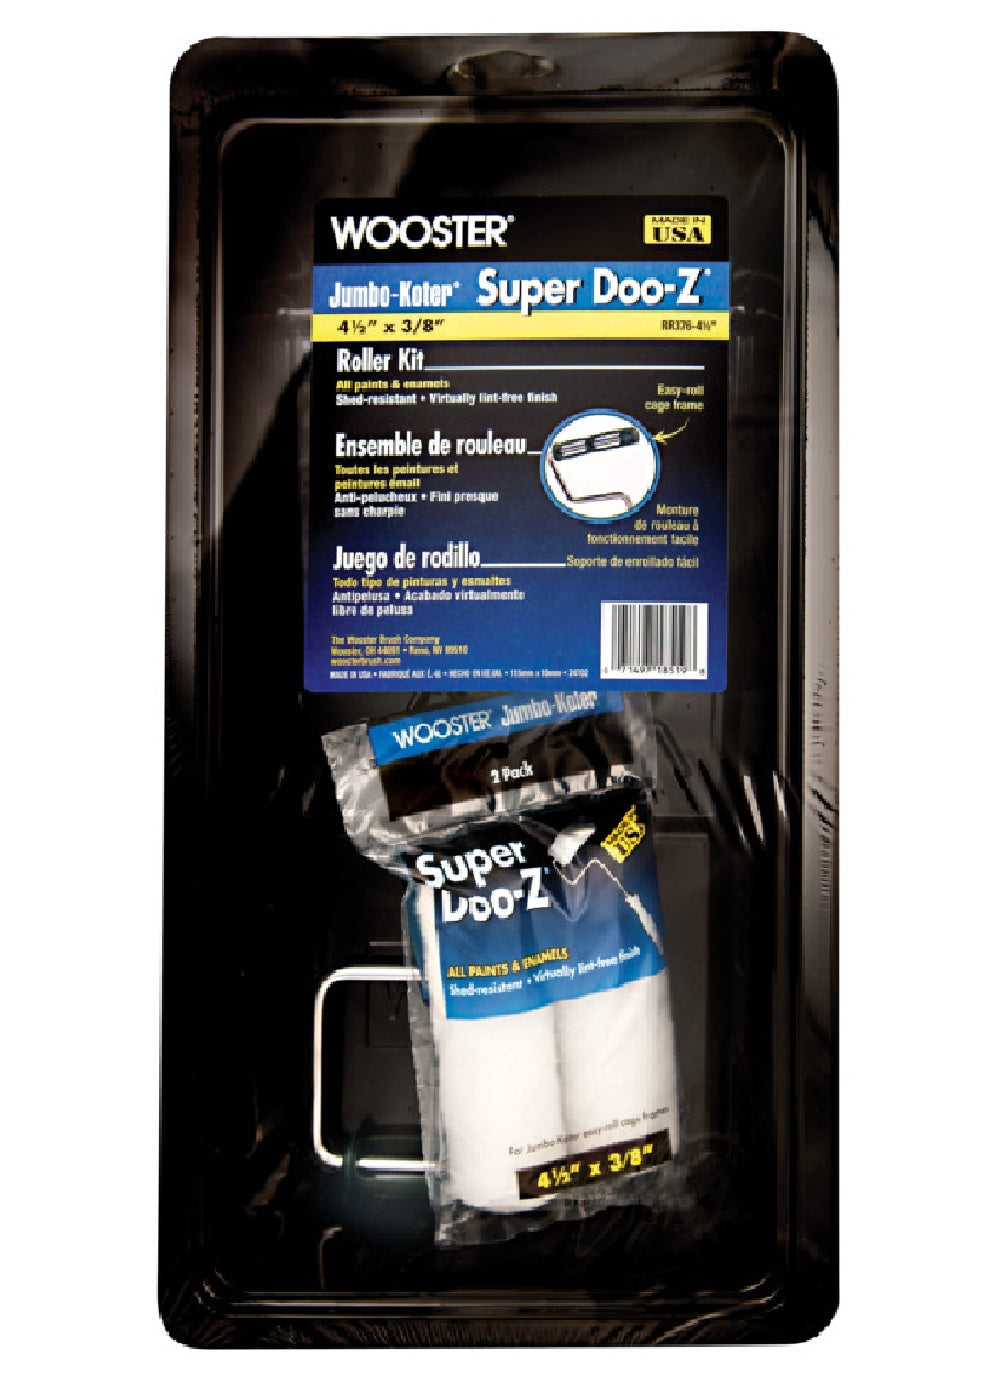 Wooster RR376-4 1/2 Jumbo-Koter Super Doo-Z Nap Kit